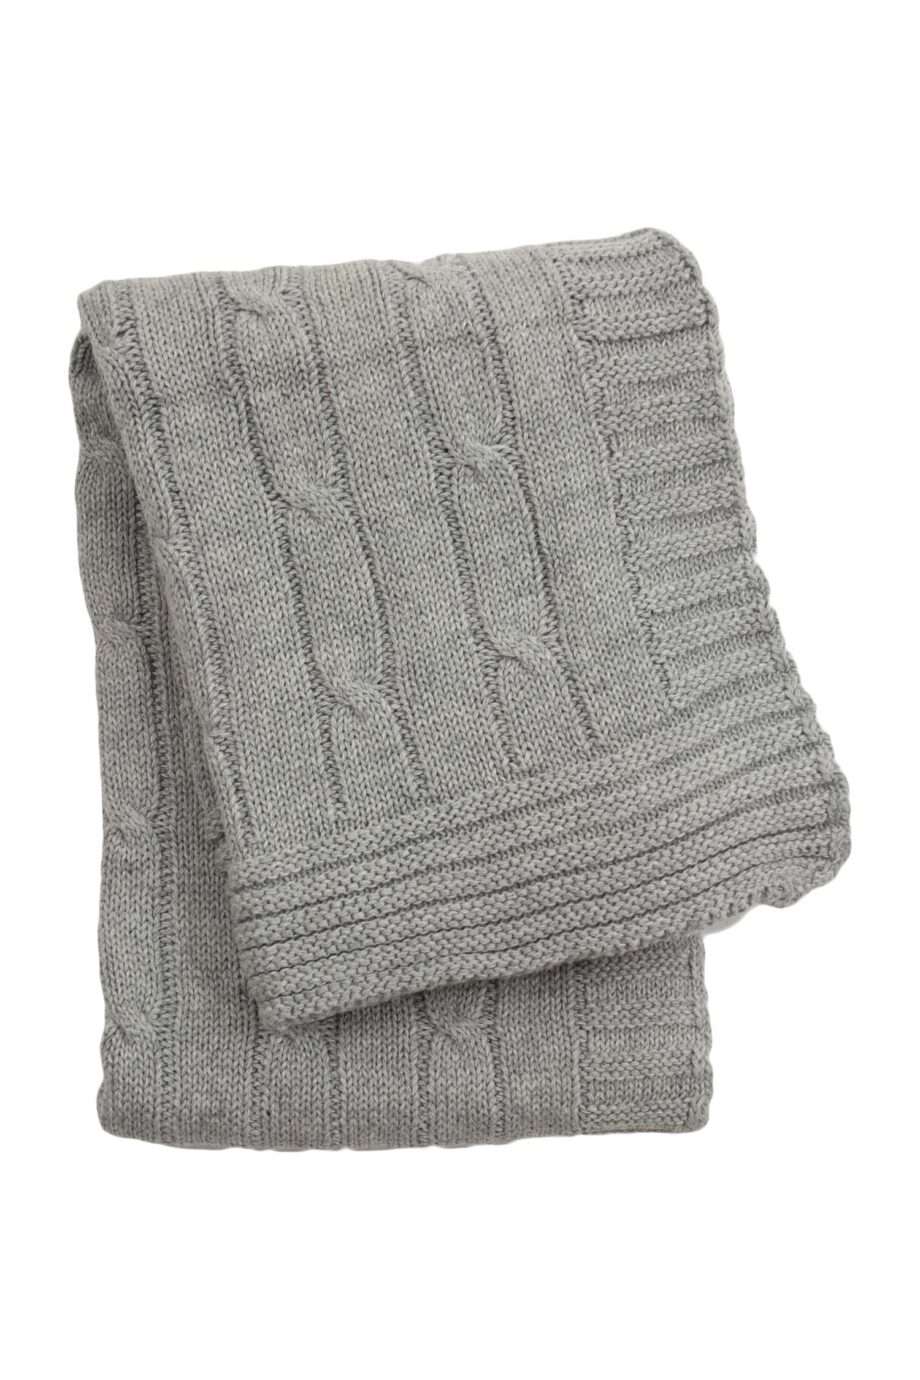 twist light grey knitted cotton little blanket medium